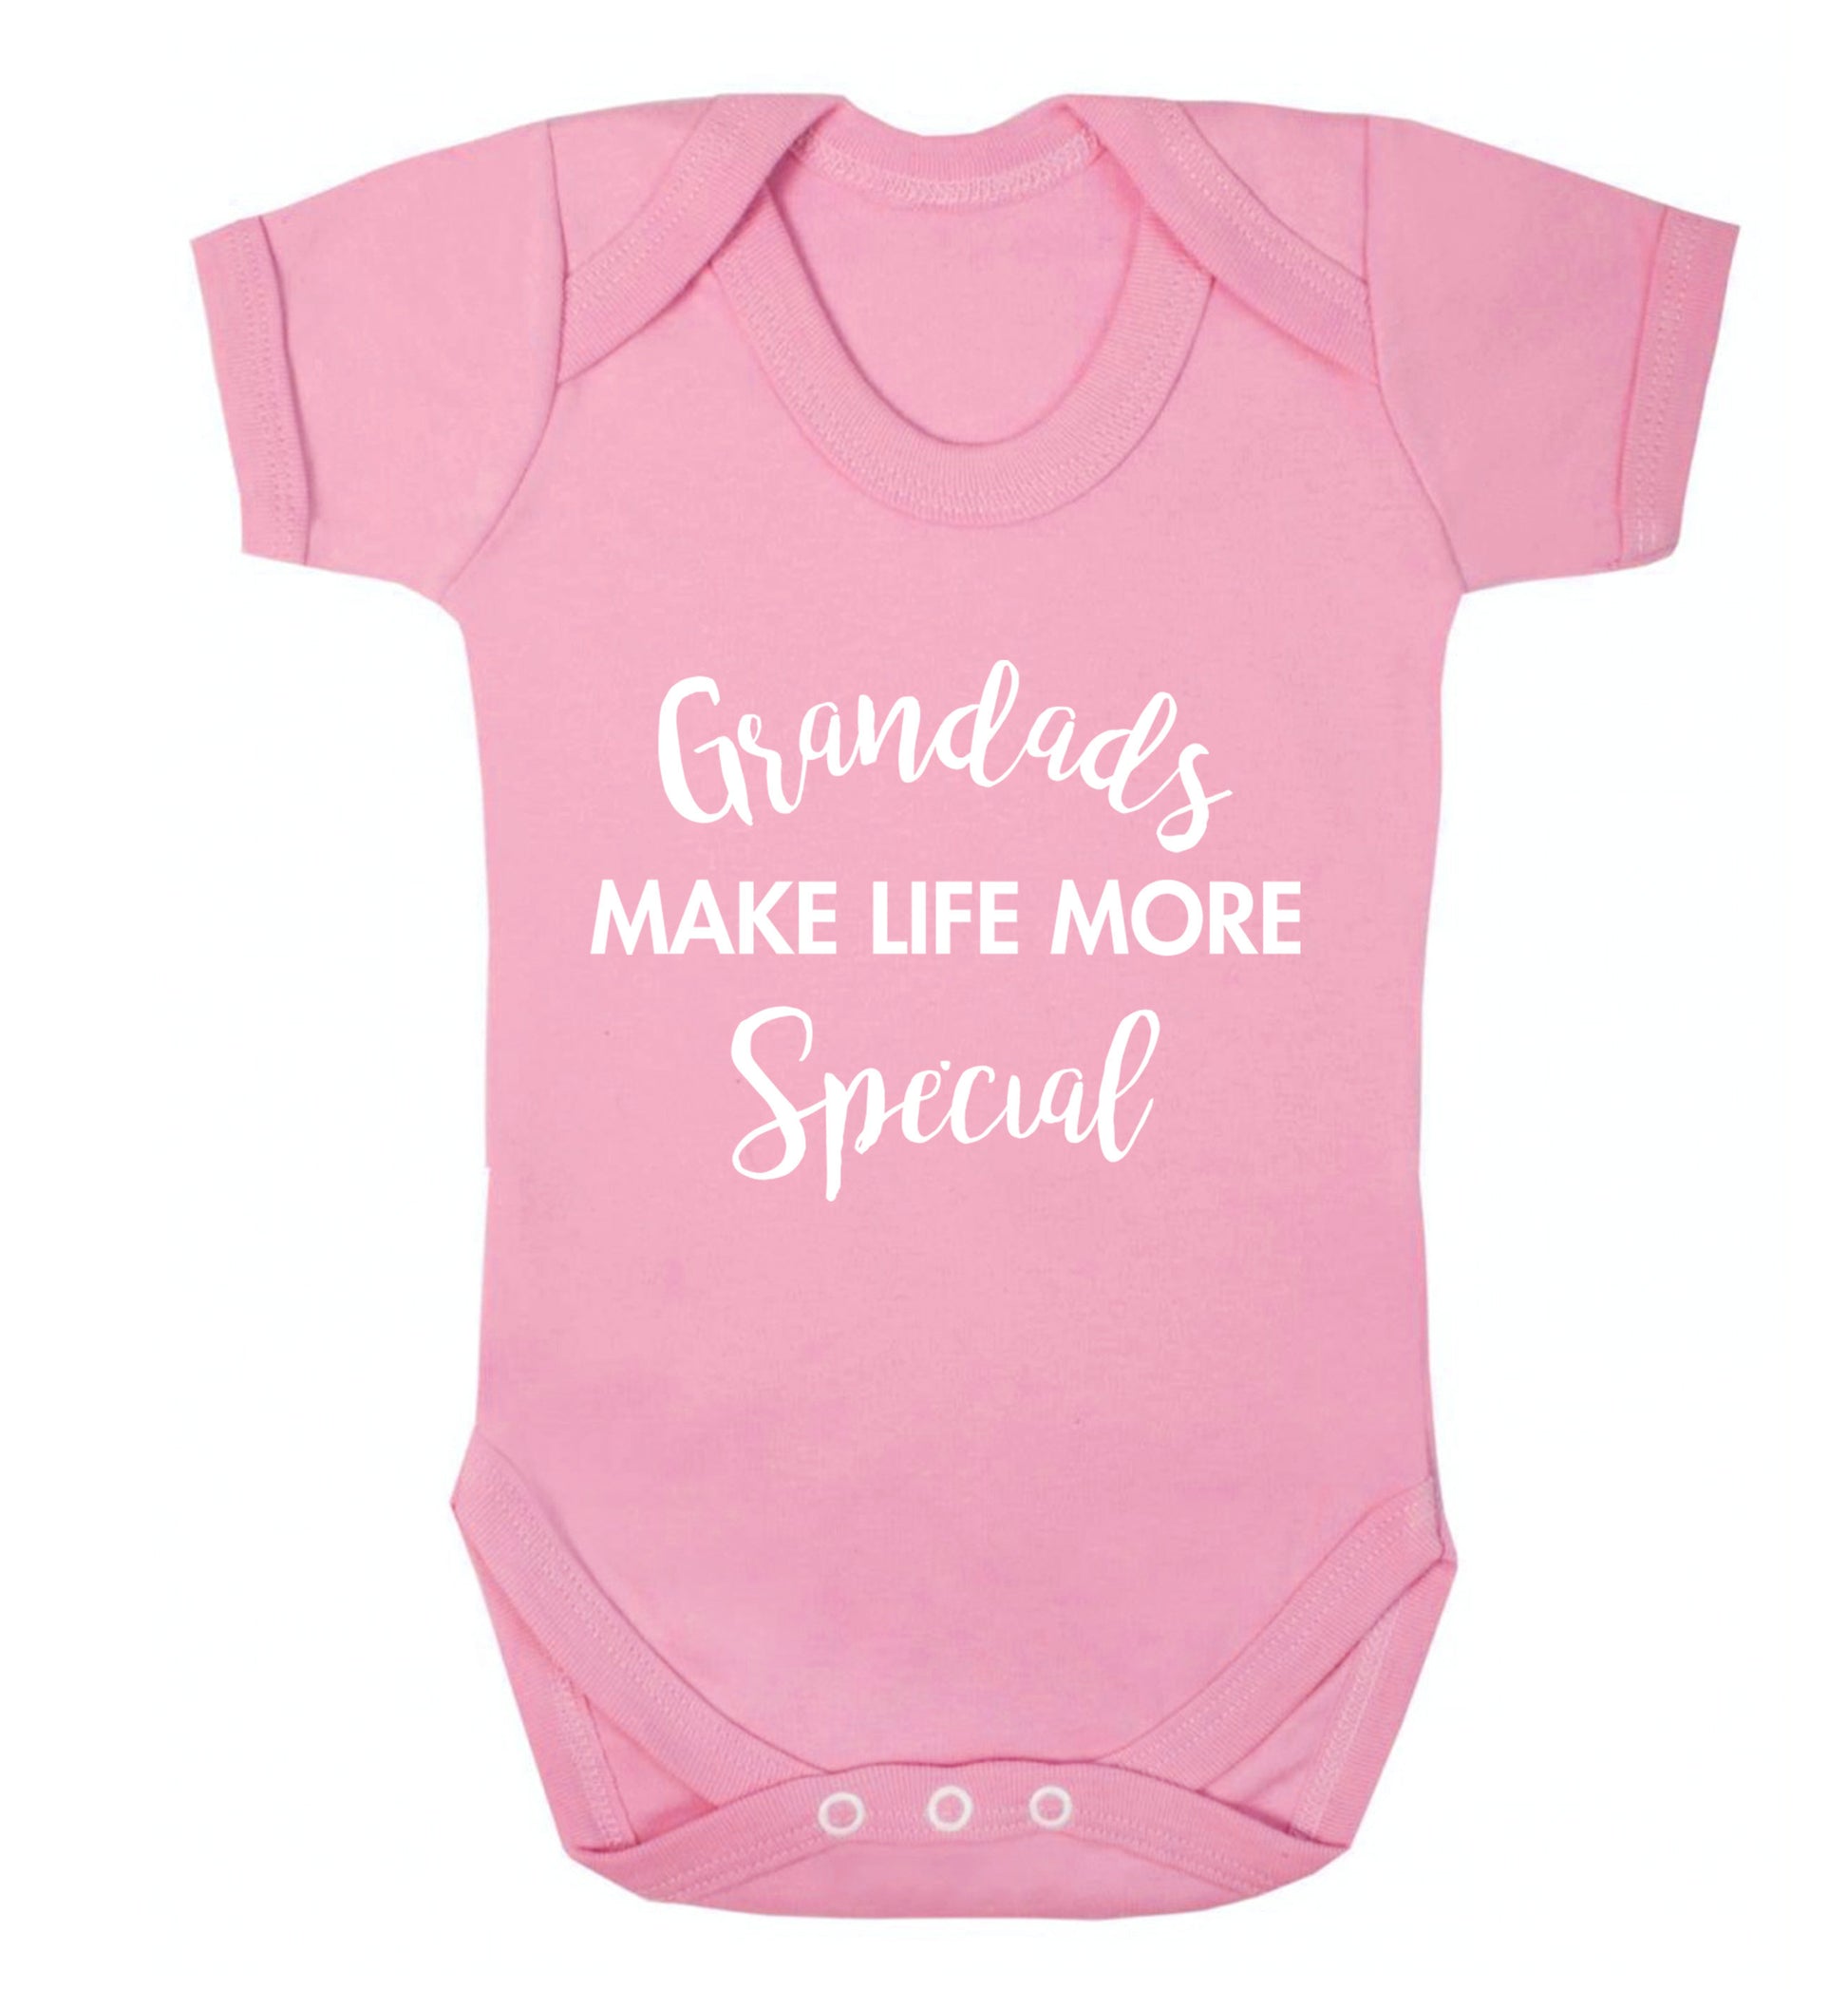 Grandads make life more special Baby Vest pale pink 18-24 months